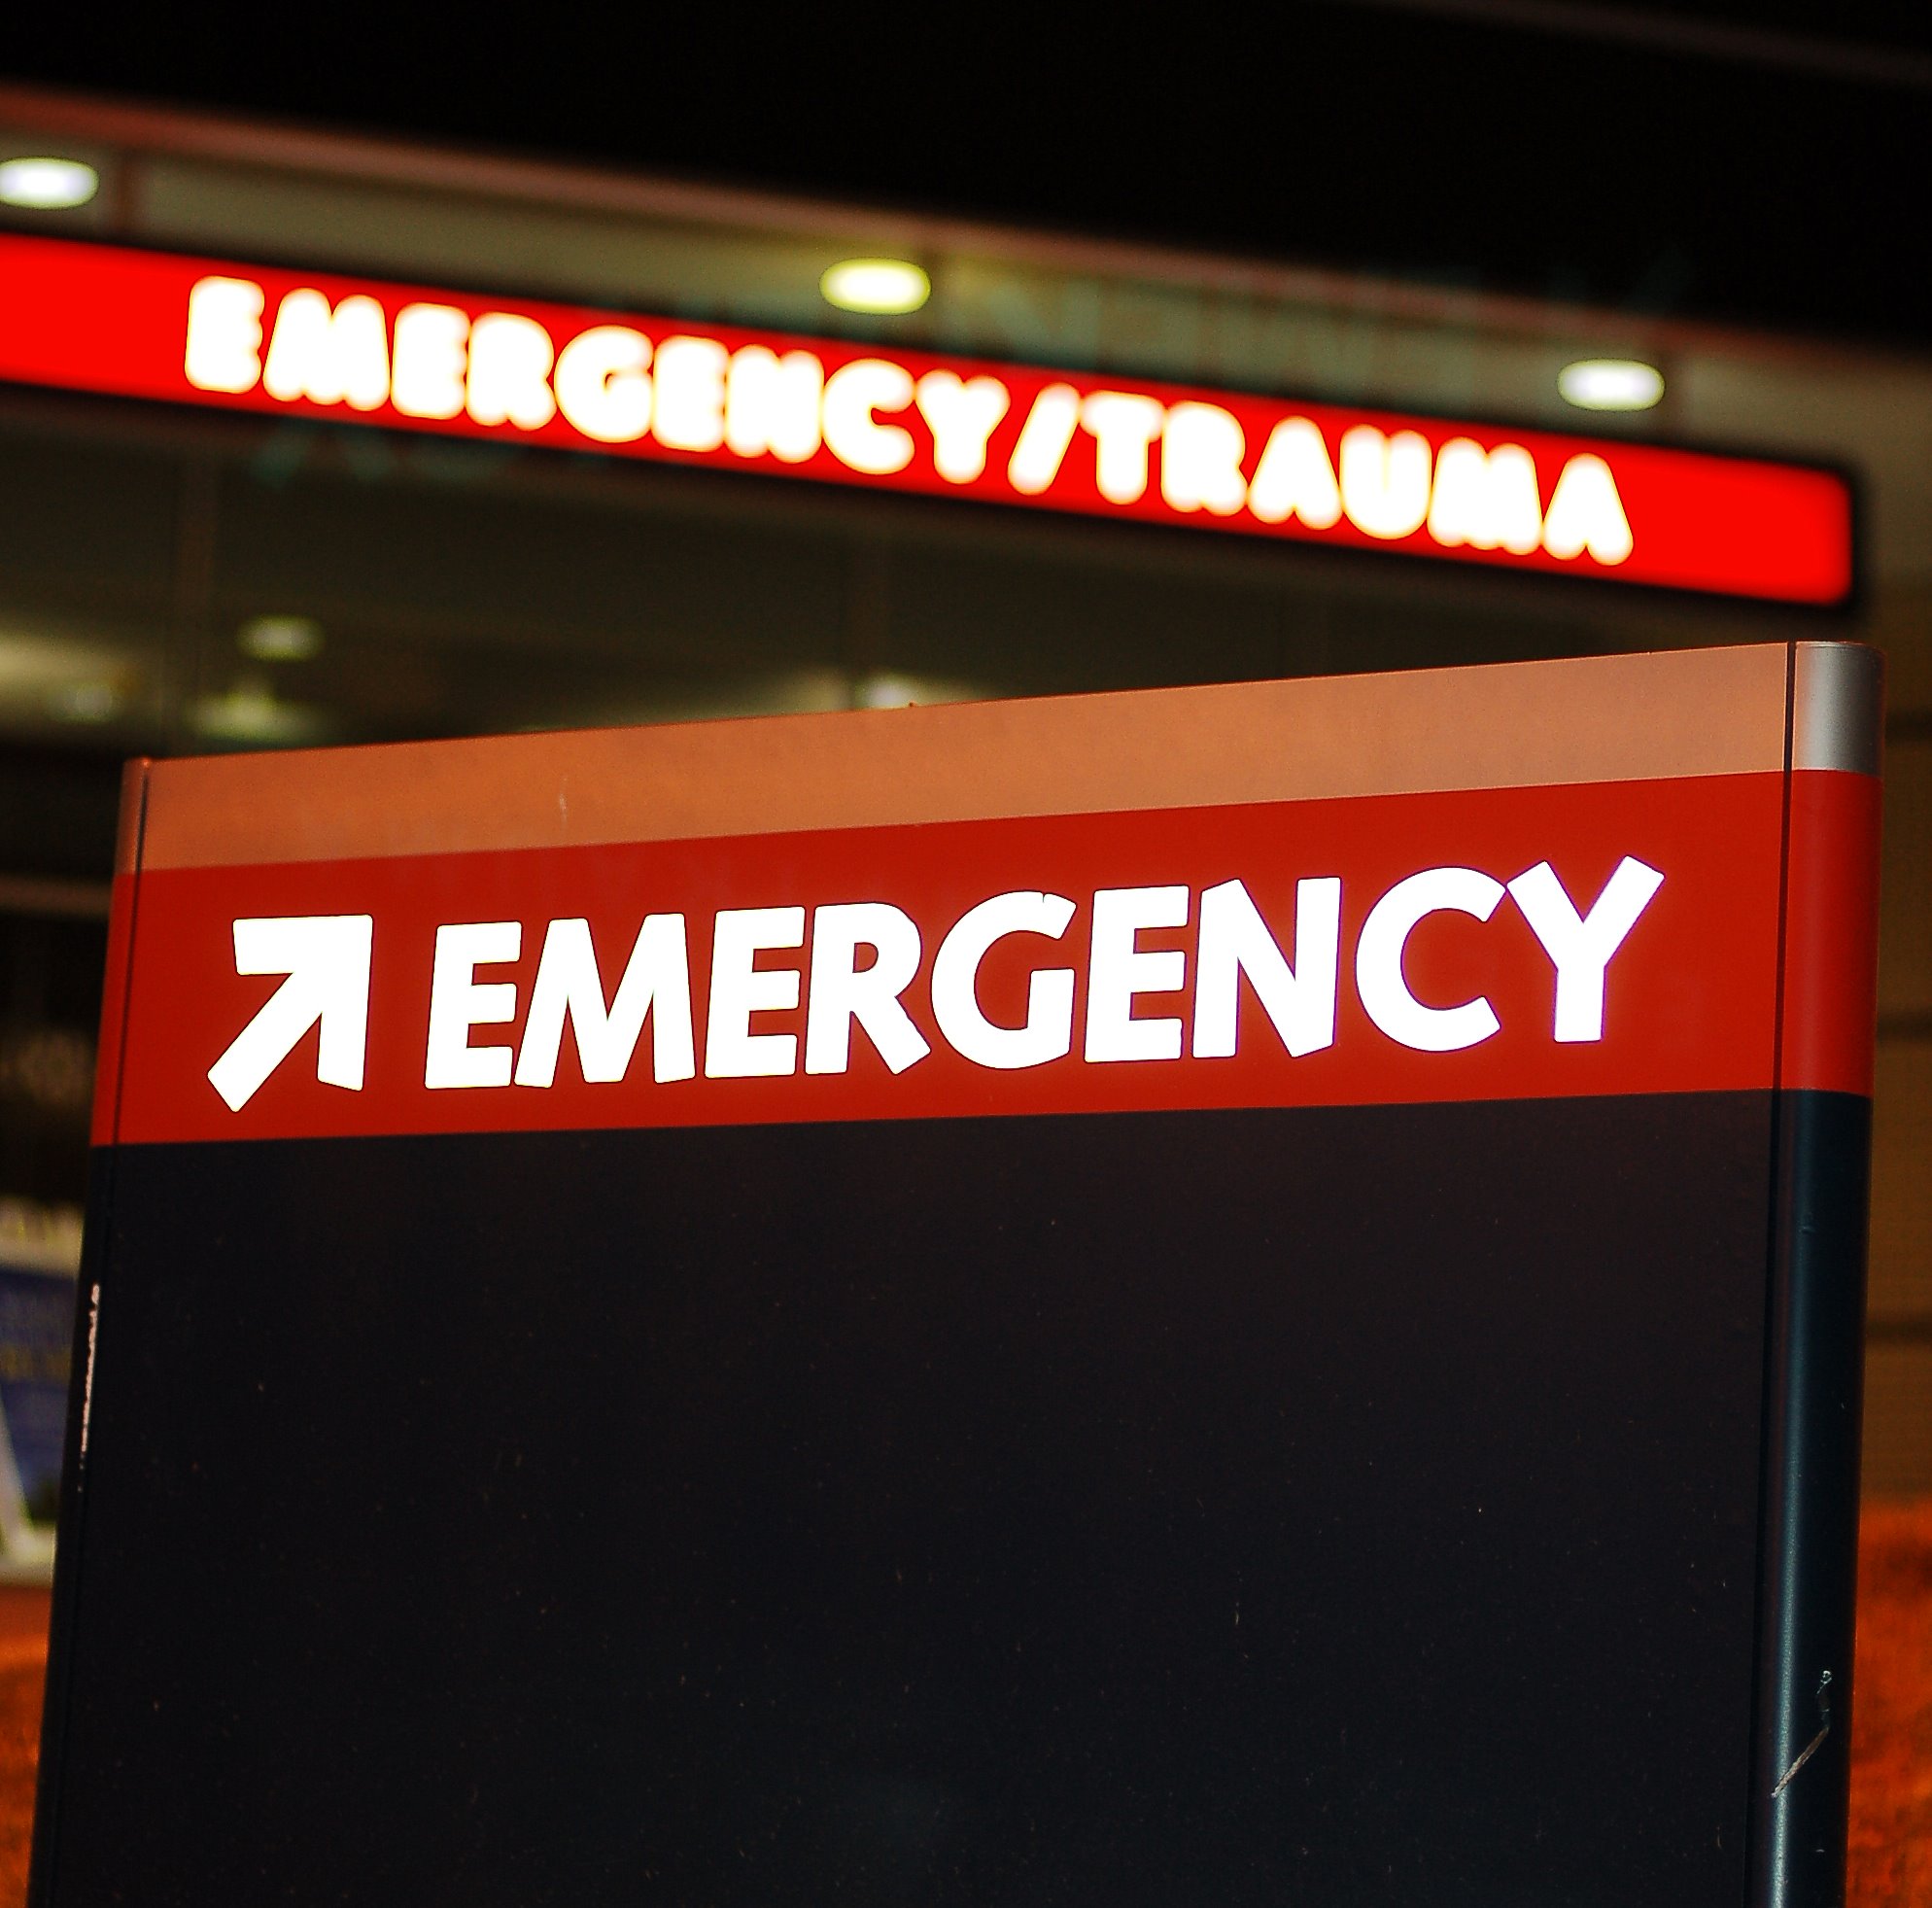 Hospital emergency room signs